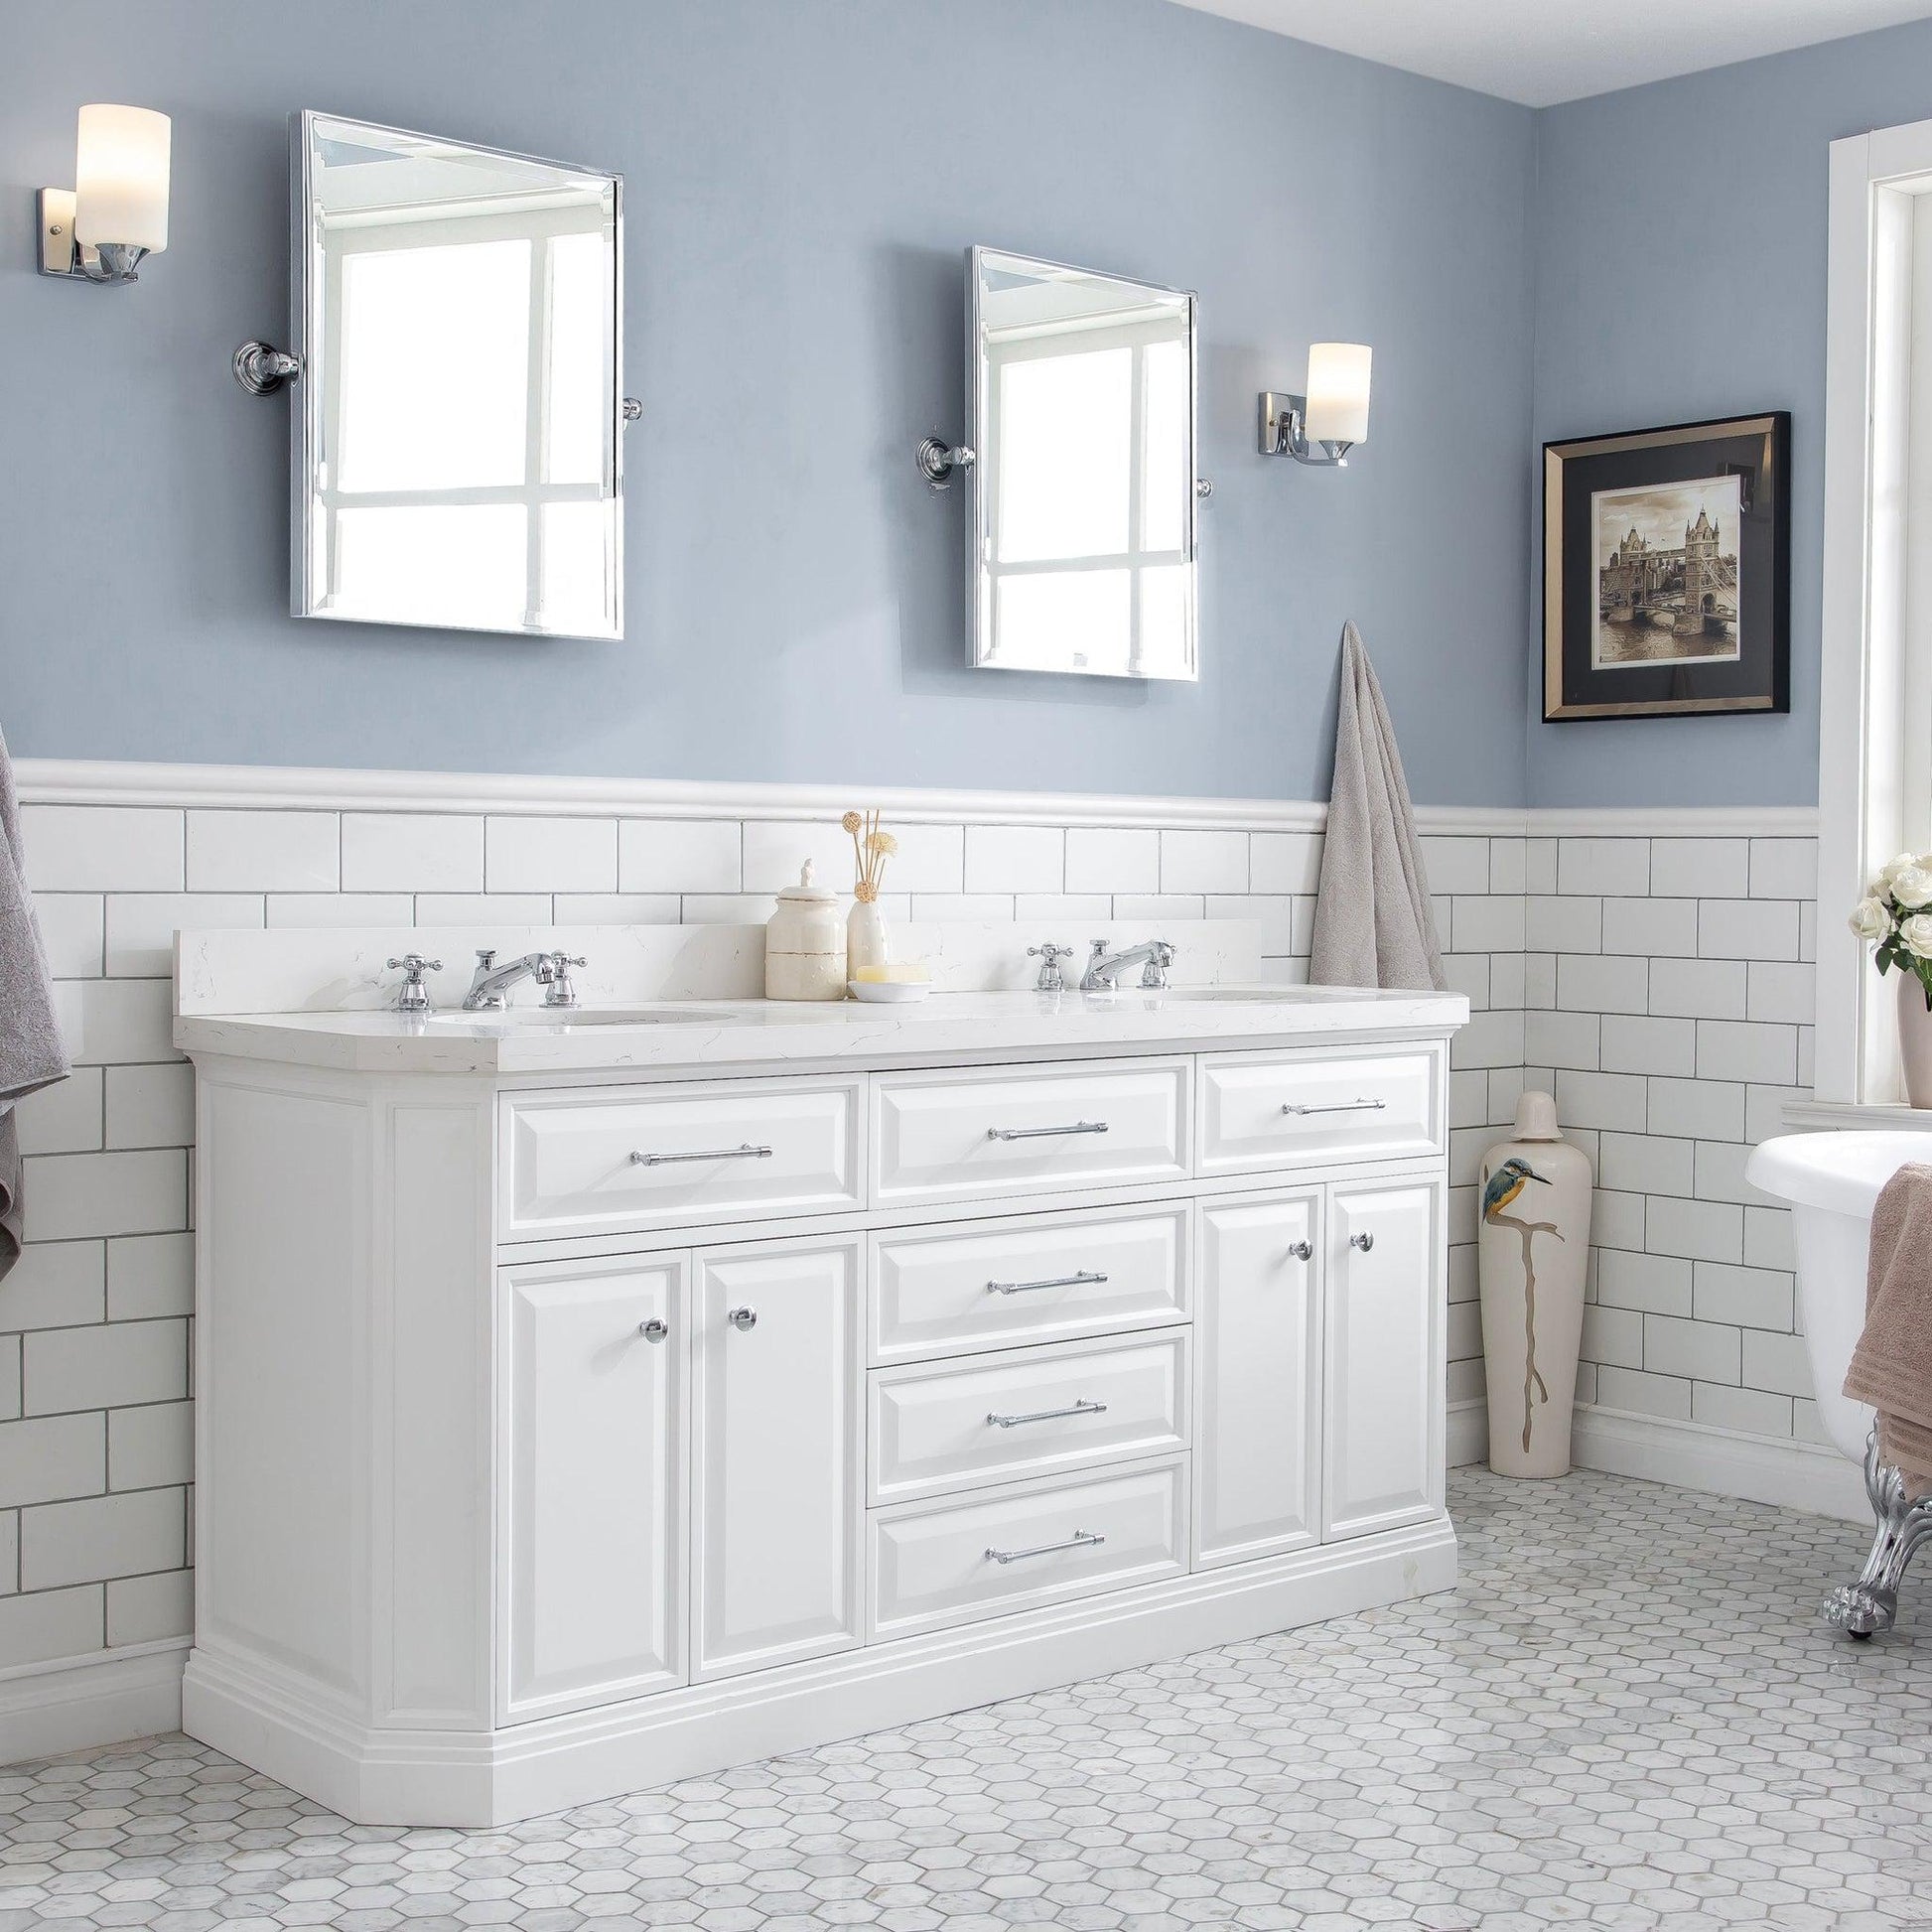 Water Creation Palace 72" Quartz Carrara Pure White Bathroom Vanity Set With Hardware in Chrome Finish